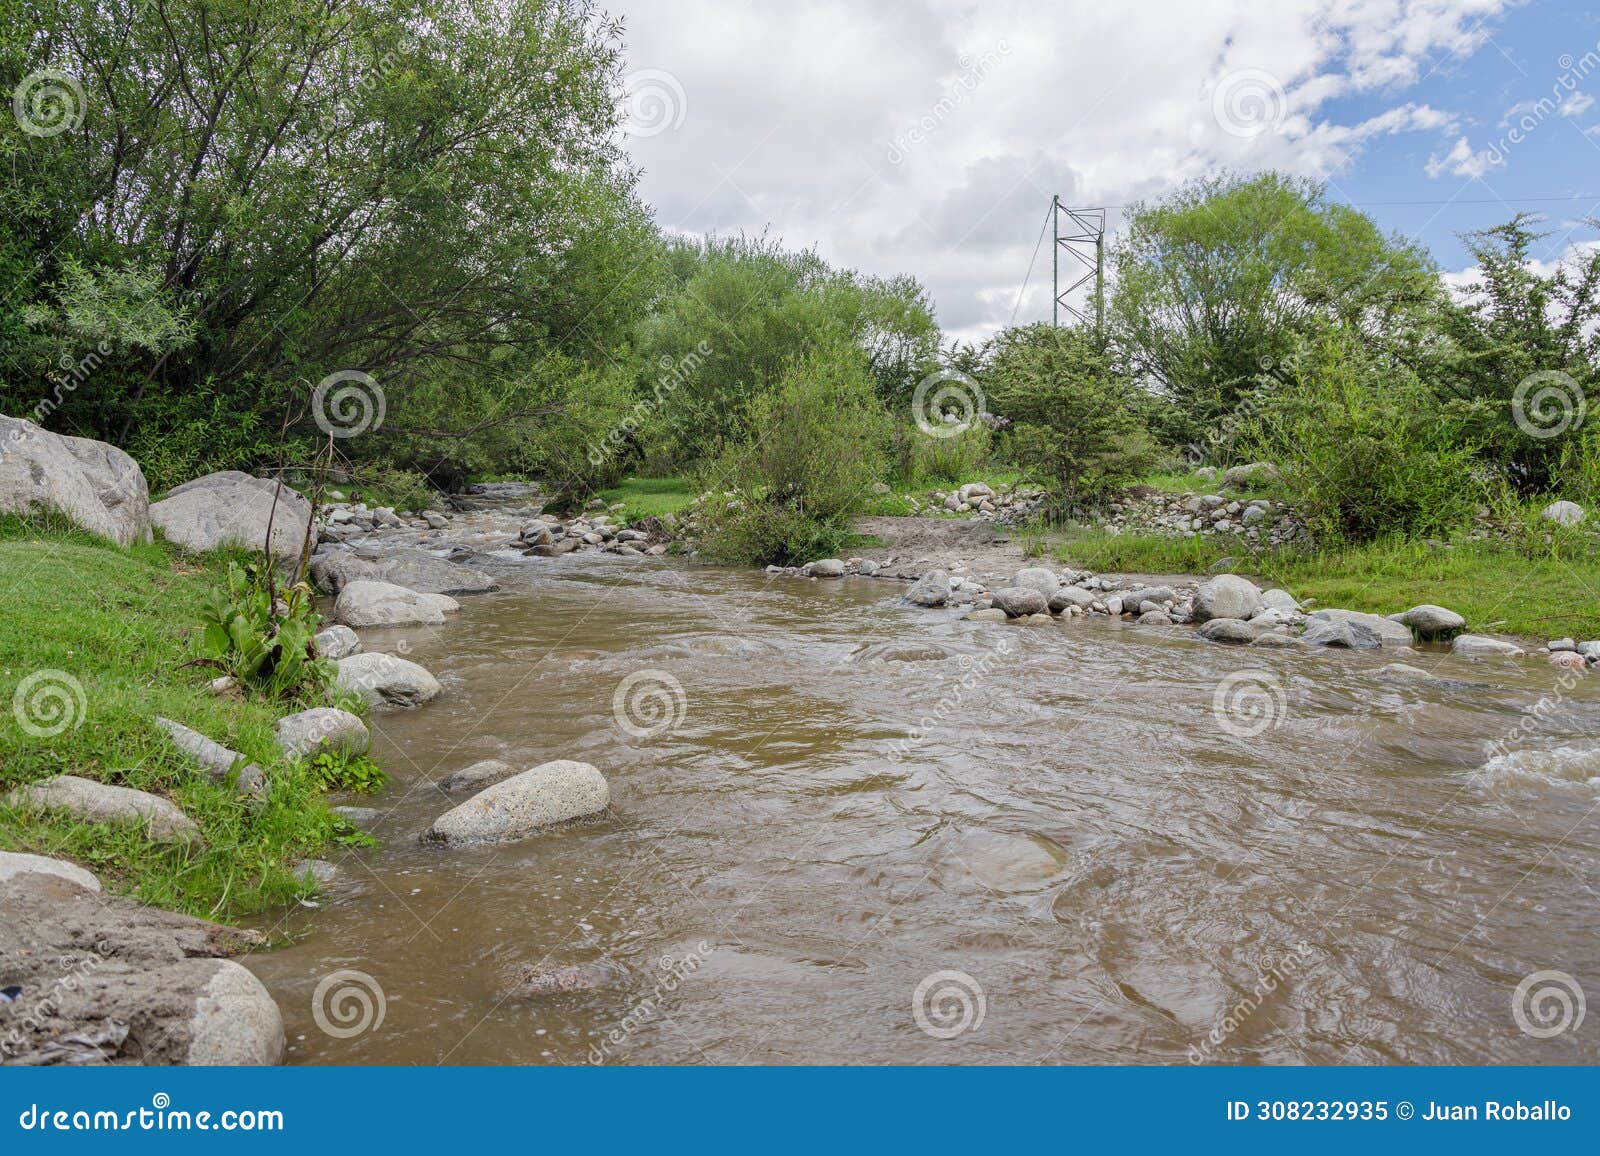 tafi river in the province of tucuman argentina